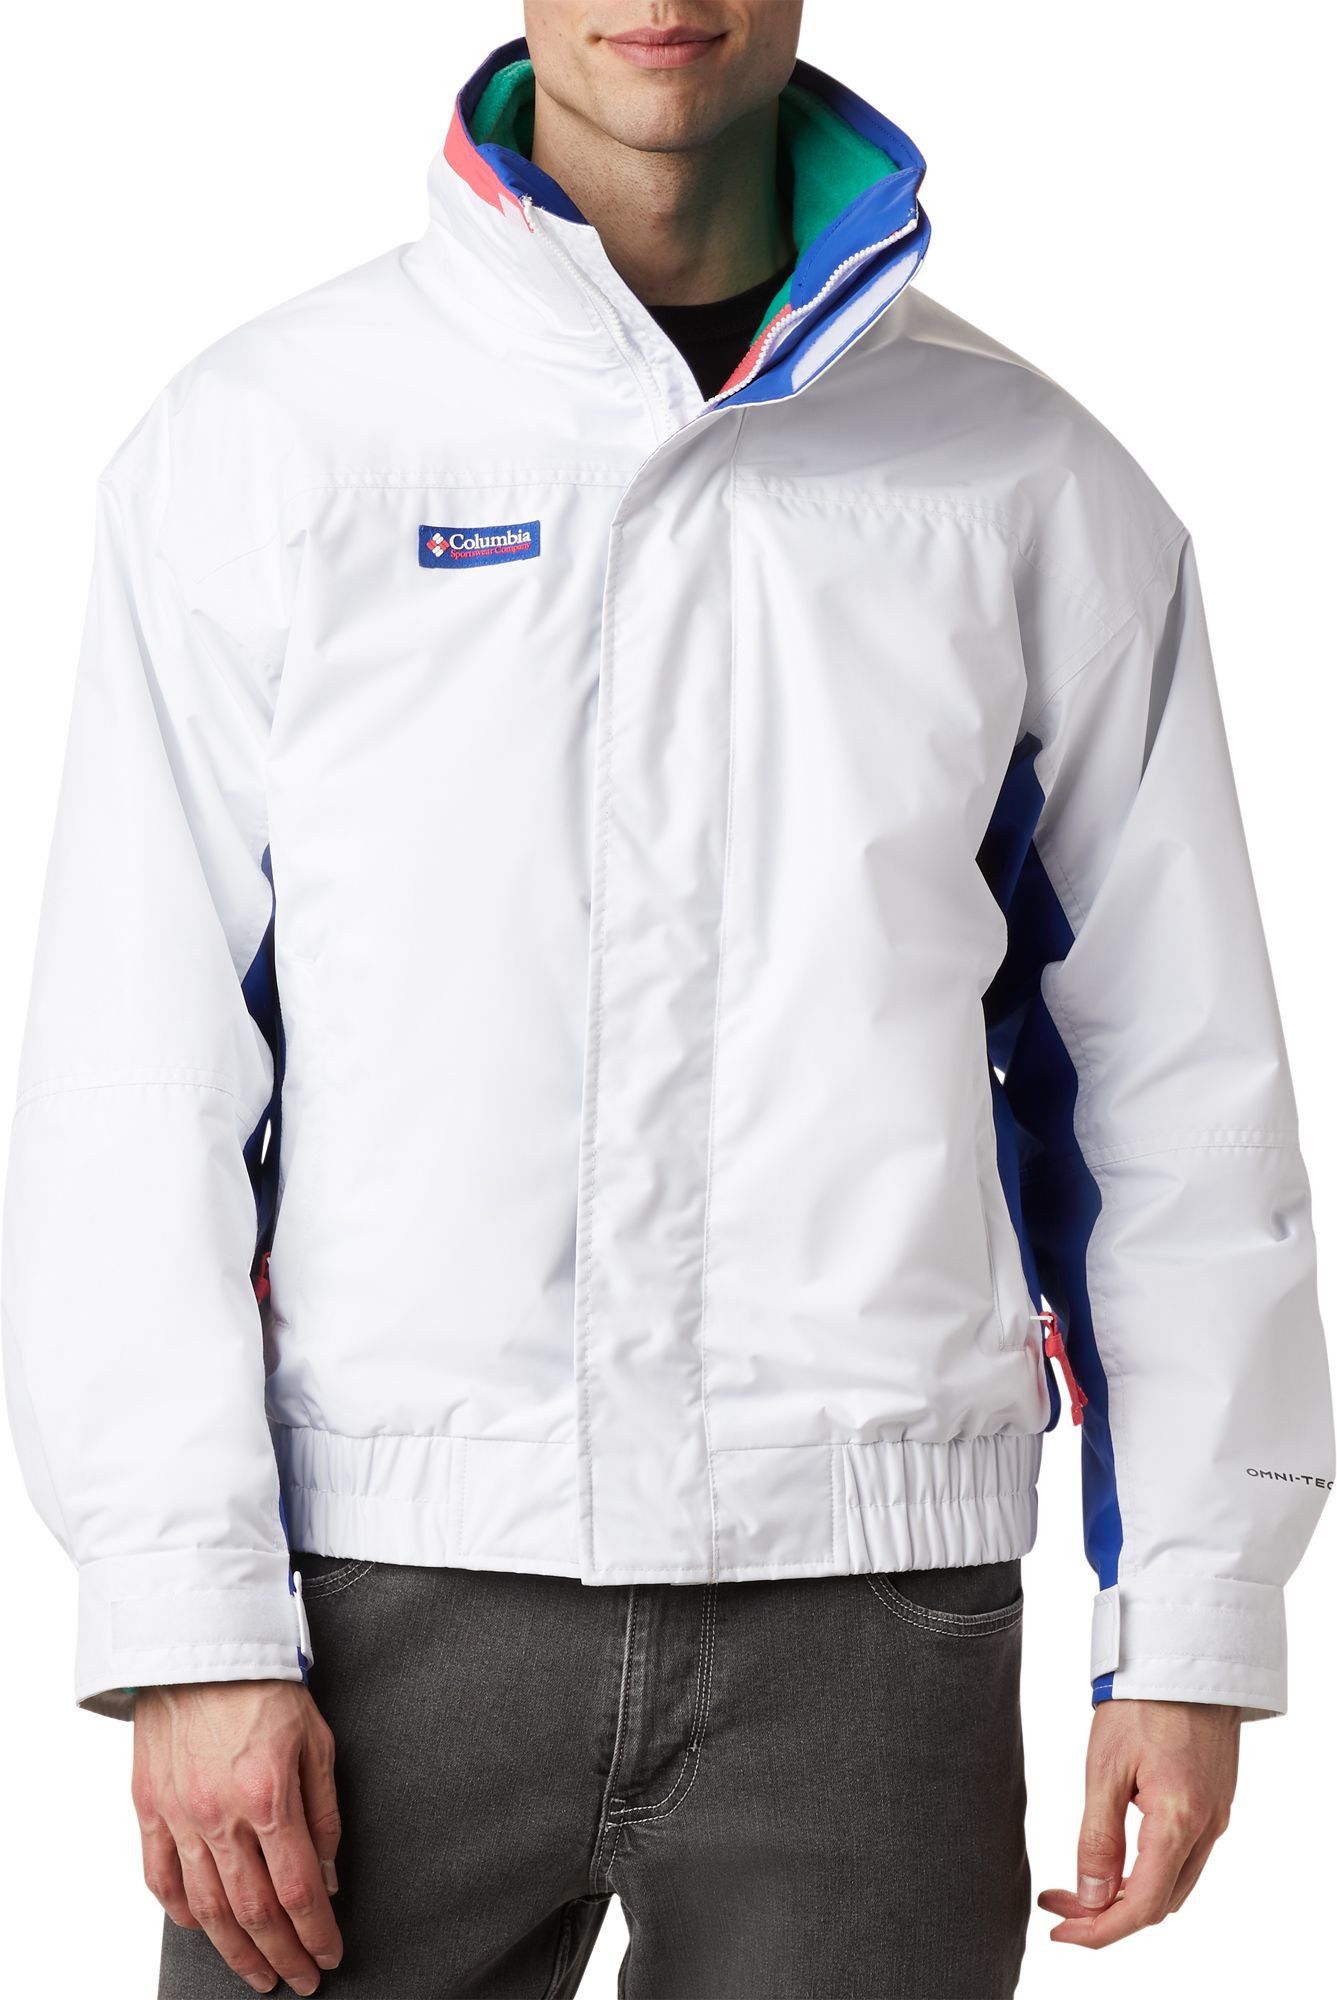 columbia visible whiteout men's interchange jacket